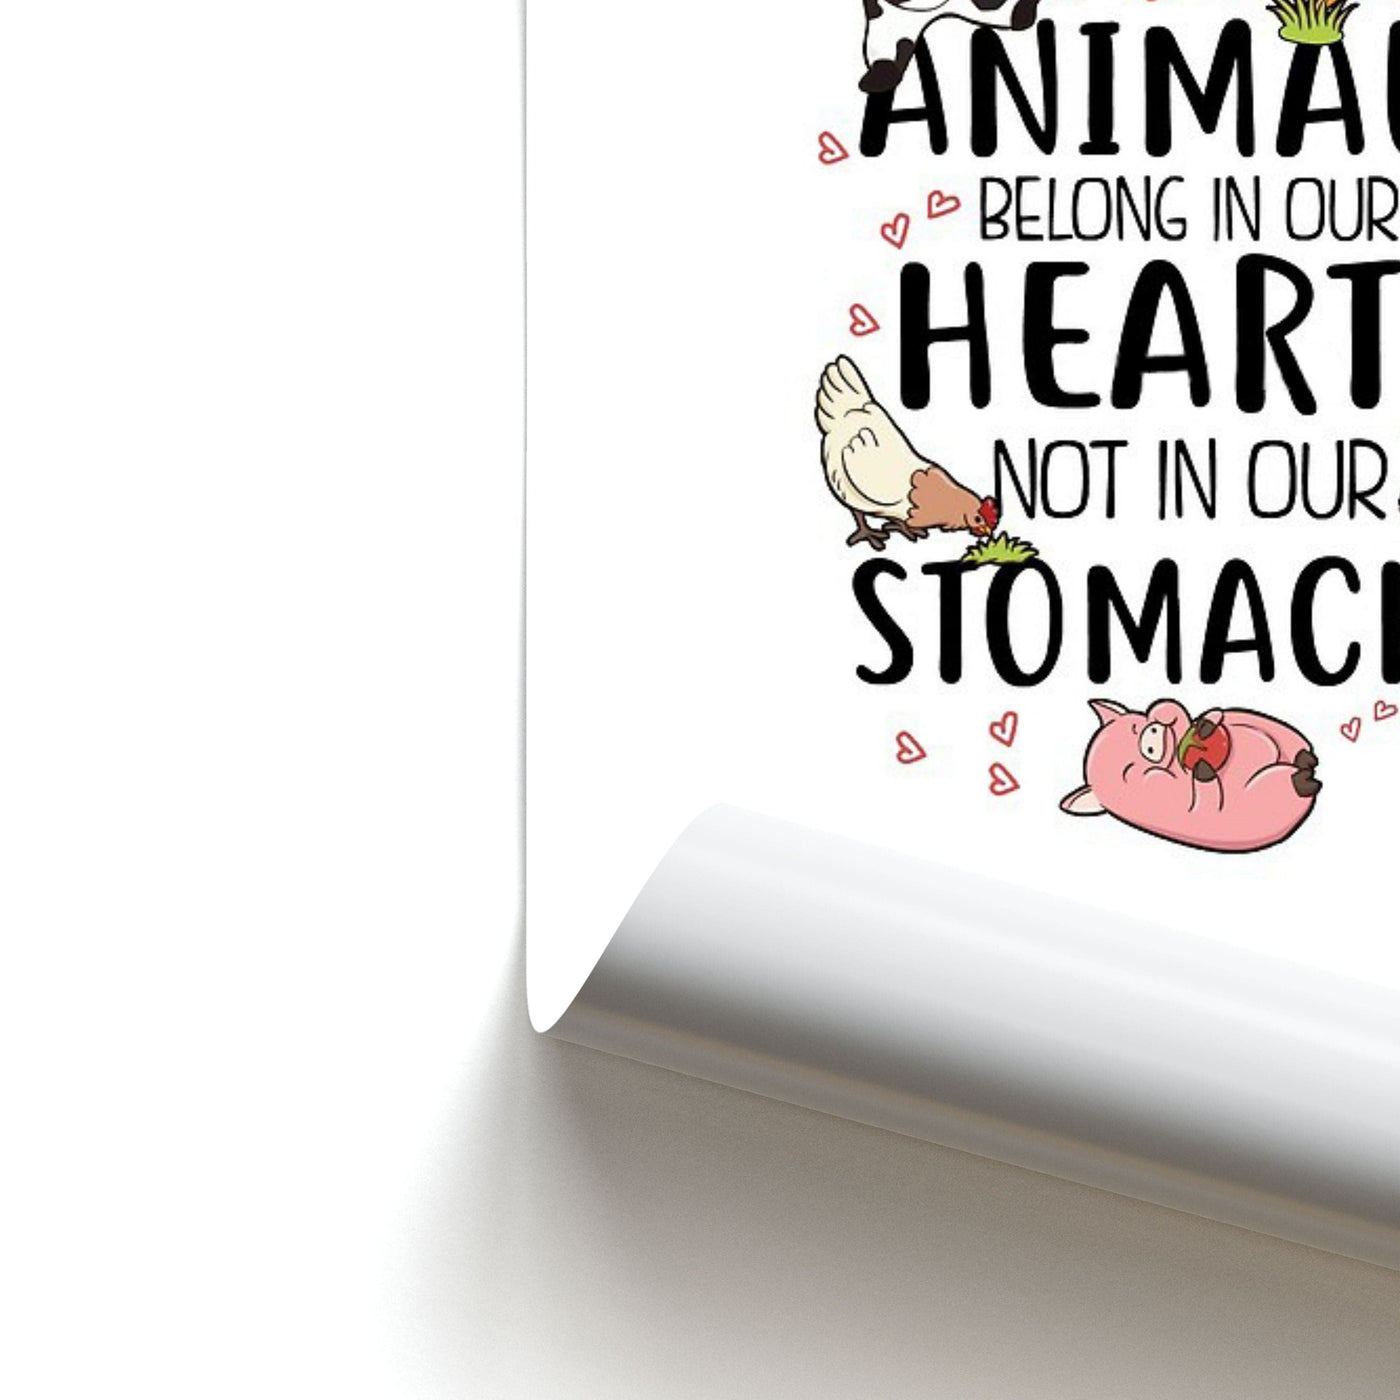 Animals Belong In Our Hearts - Vegan Poster